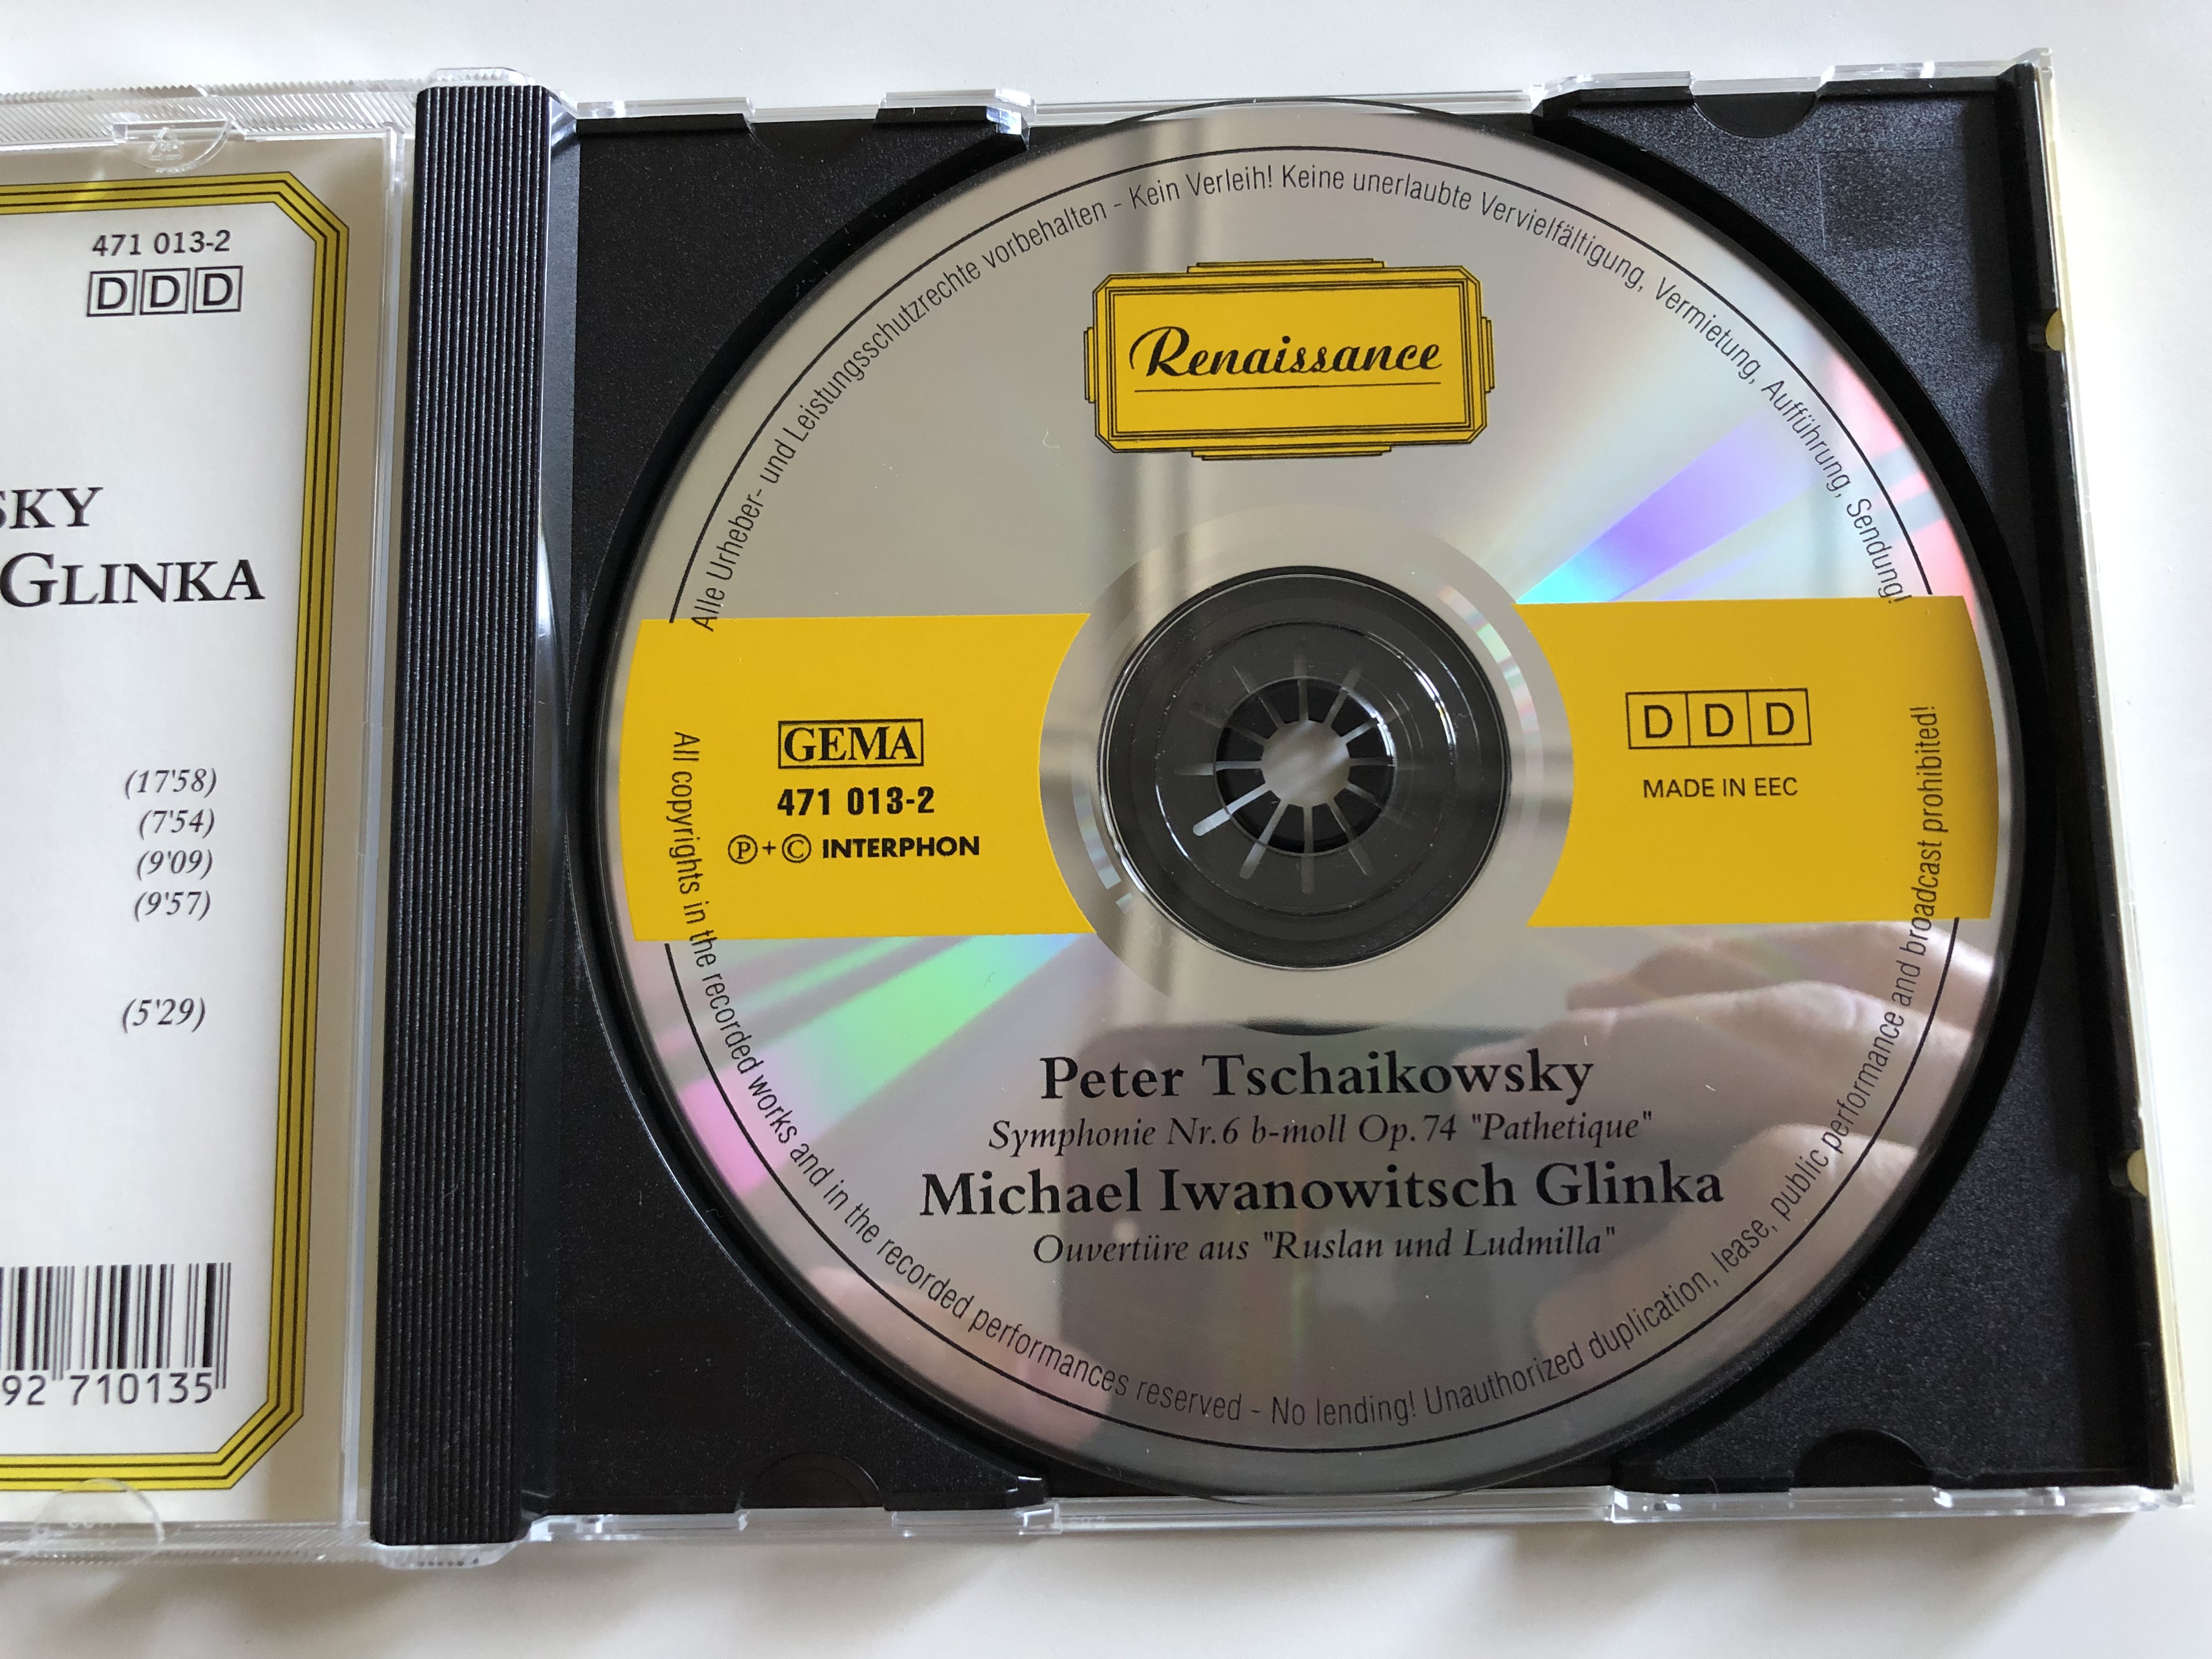 renaissance-peter-tschaikowsky-symphonie-nr.6-pathetique-gema-audio-cd-471-013-2-3-.jpg